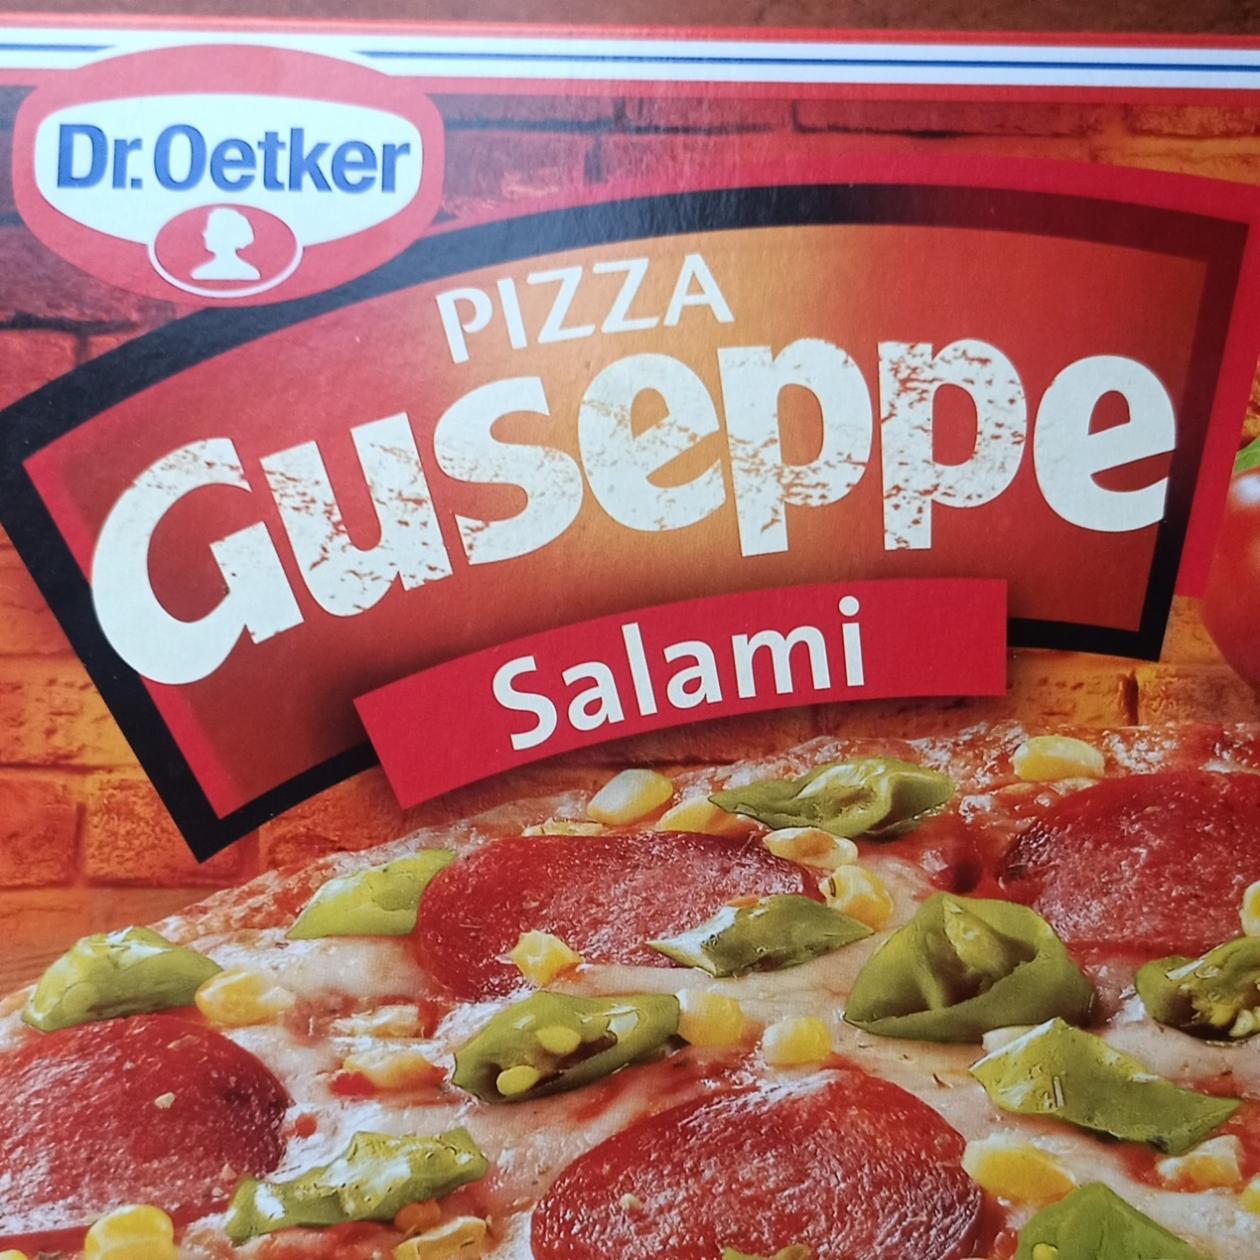 Фото - Pizza Guseppe Salami Dr. Oetker